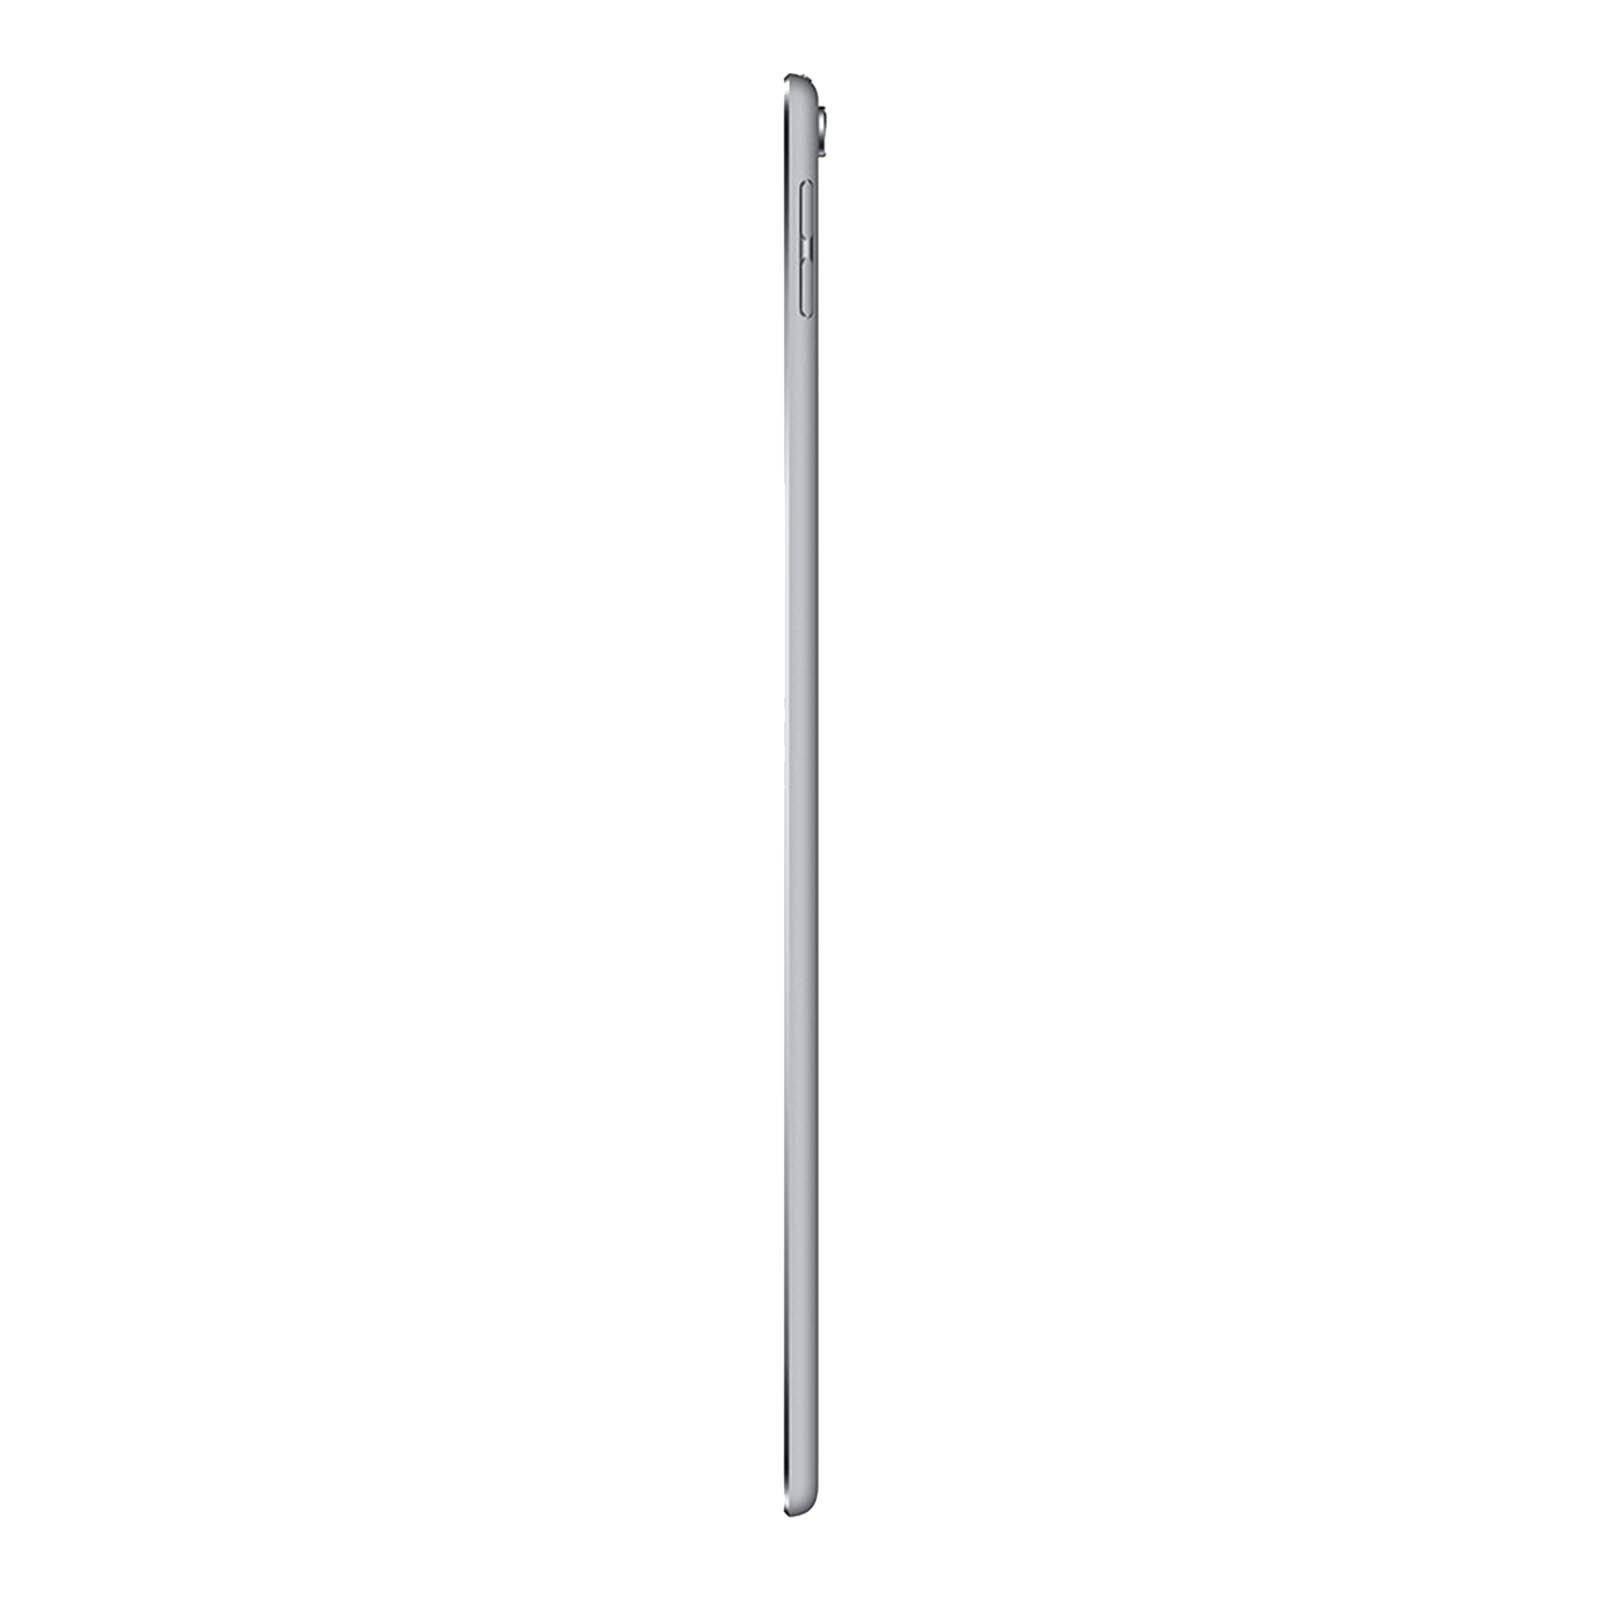 iPad Pro 10.5 Inch 64GB Space Grey Pristine - WiFi